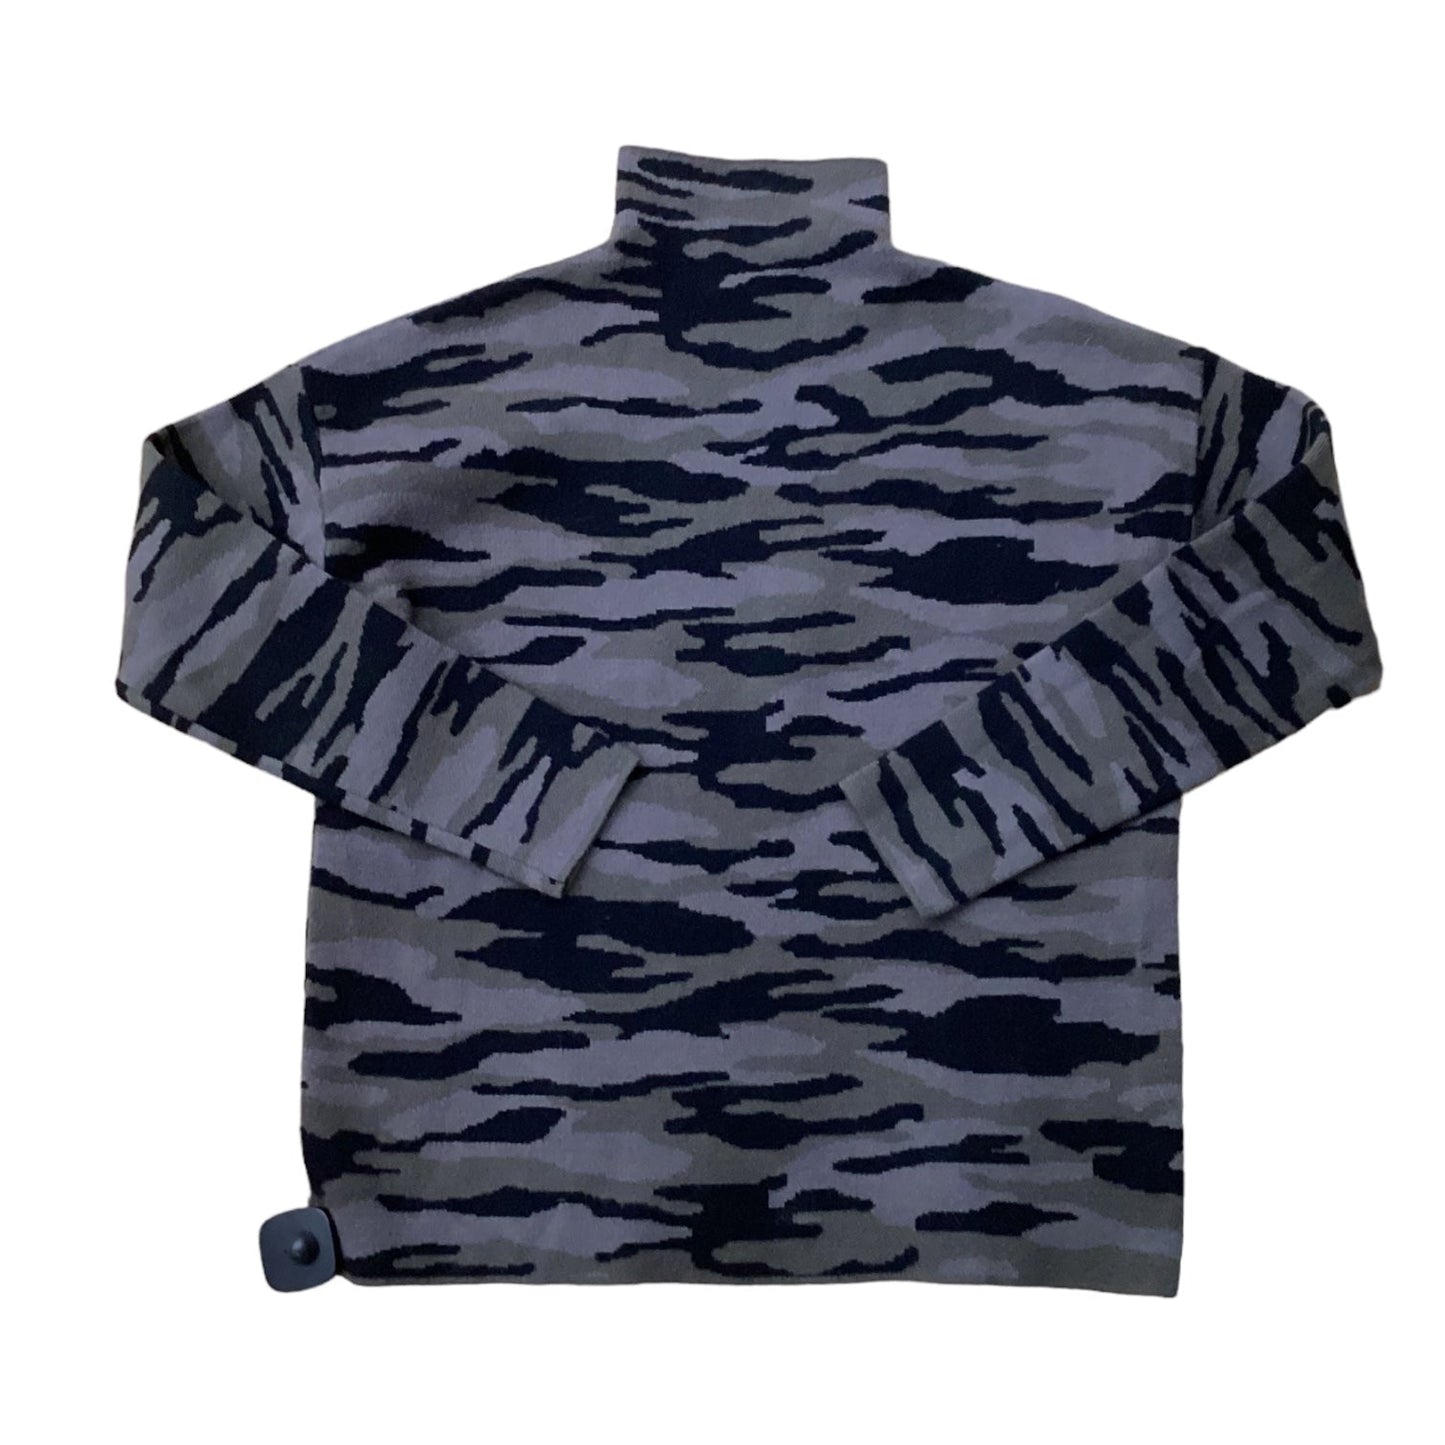 Camouflage Print Sweater T Tahari, Size S